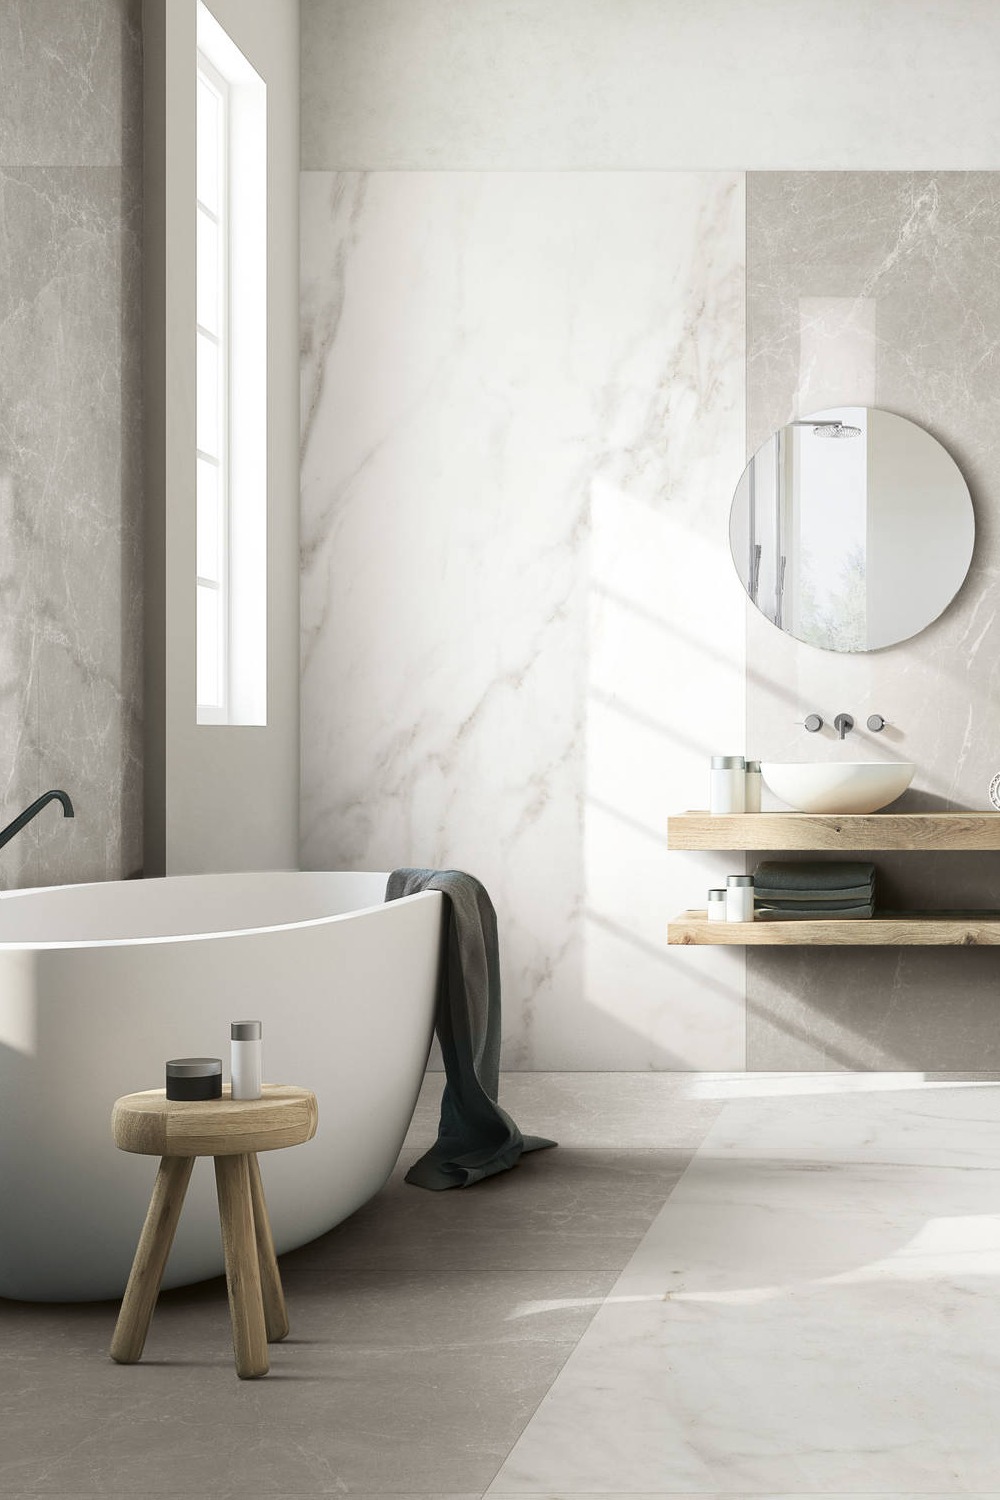 Large Format Ceramic Gray Tiles Freestanding Bathtub Wood Cabinets Vessel Sink